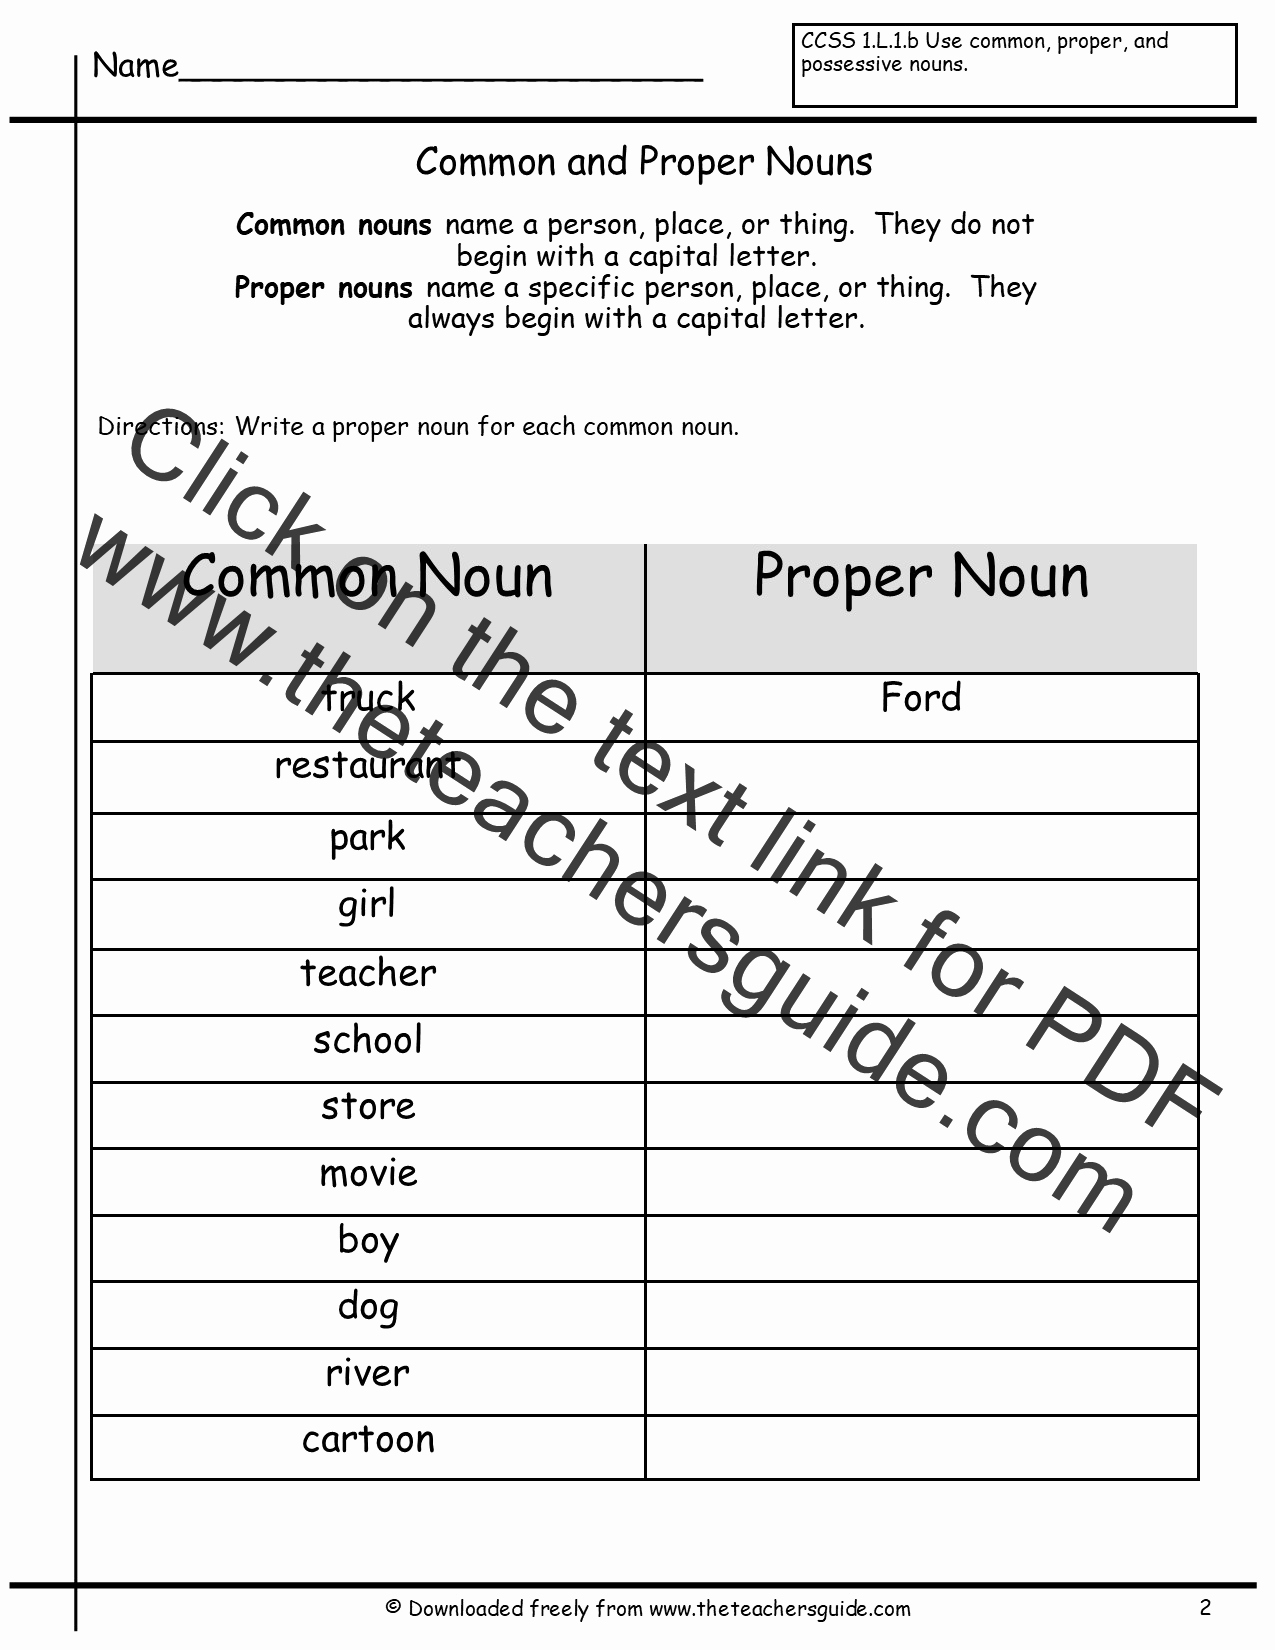 Free Proper Noun Worksheets Elegant Mon and Proper Nouns Worksheets From the Teacher S Guide